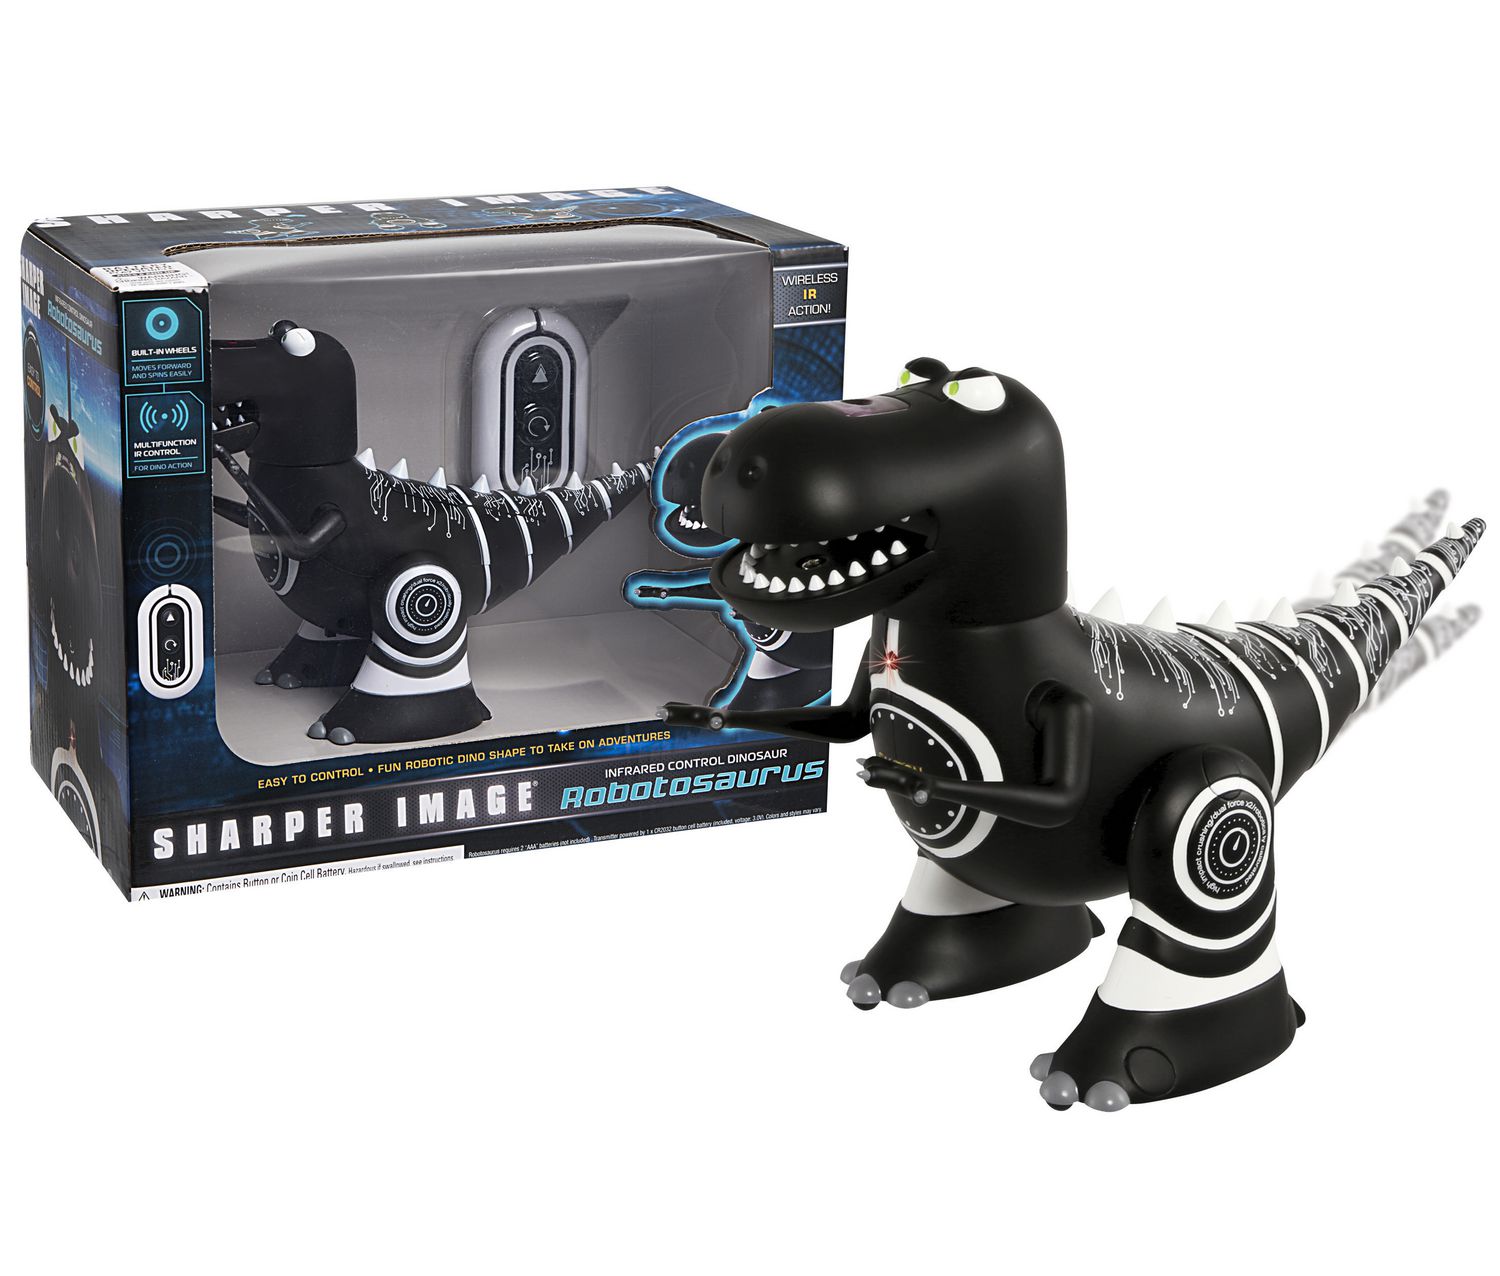 Sharper Image Infrared Wireless Control Robotic Dinosaur Robotosaurus for sale online 